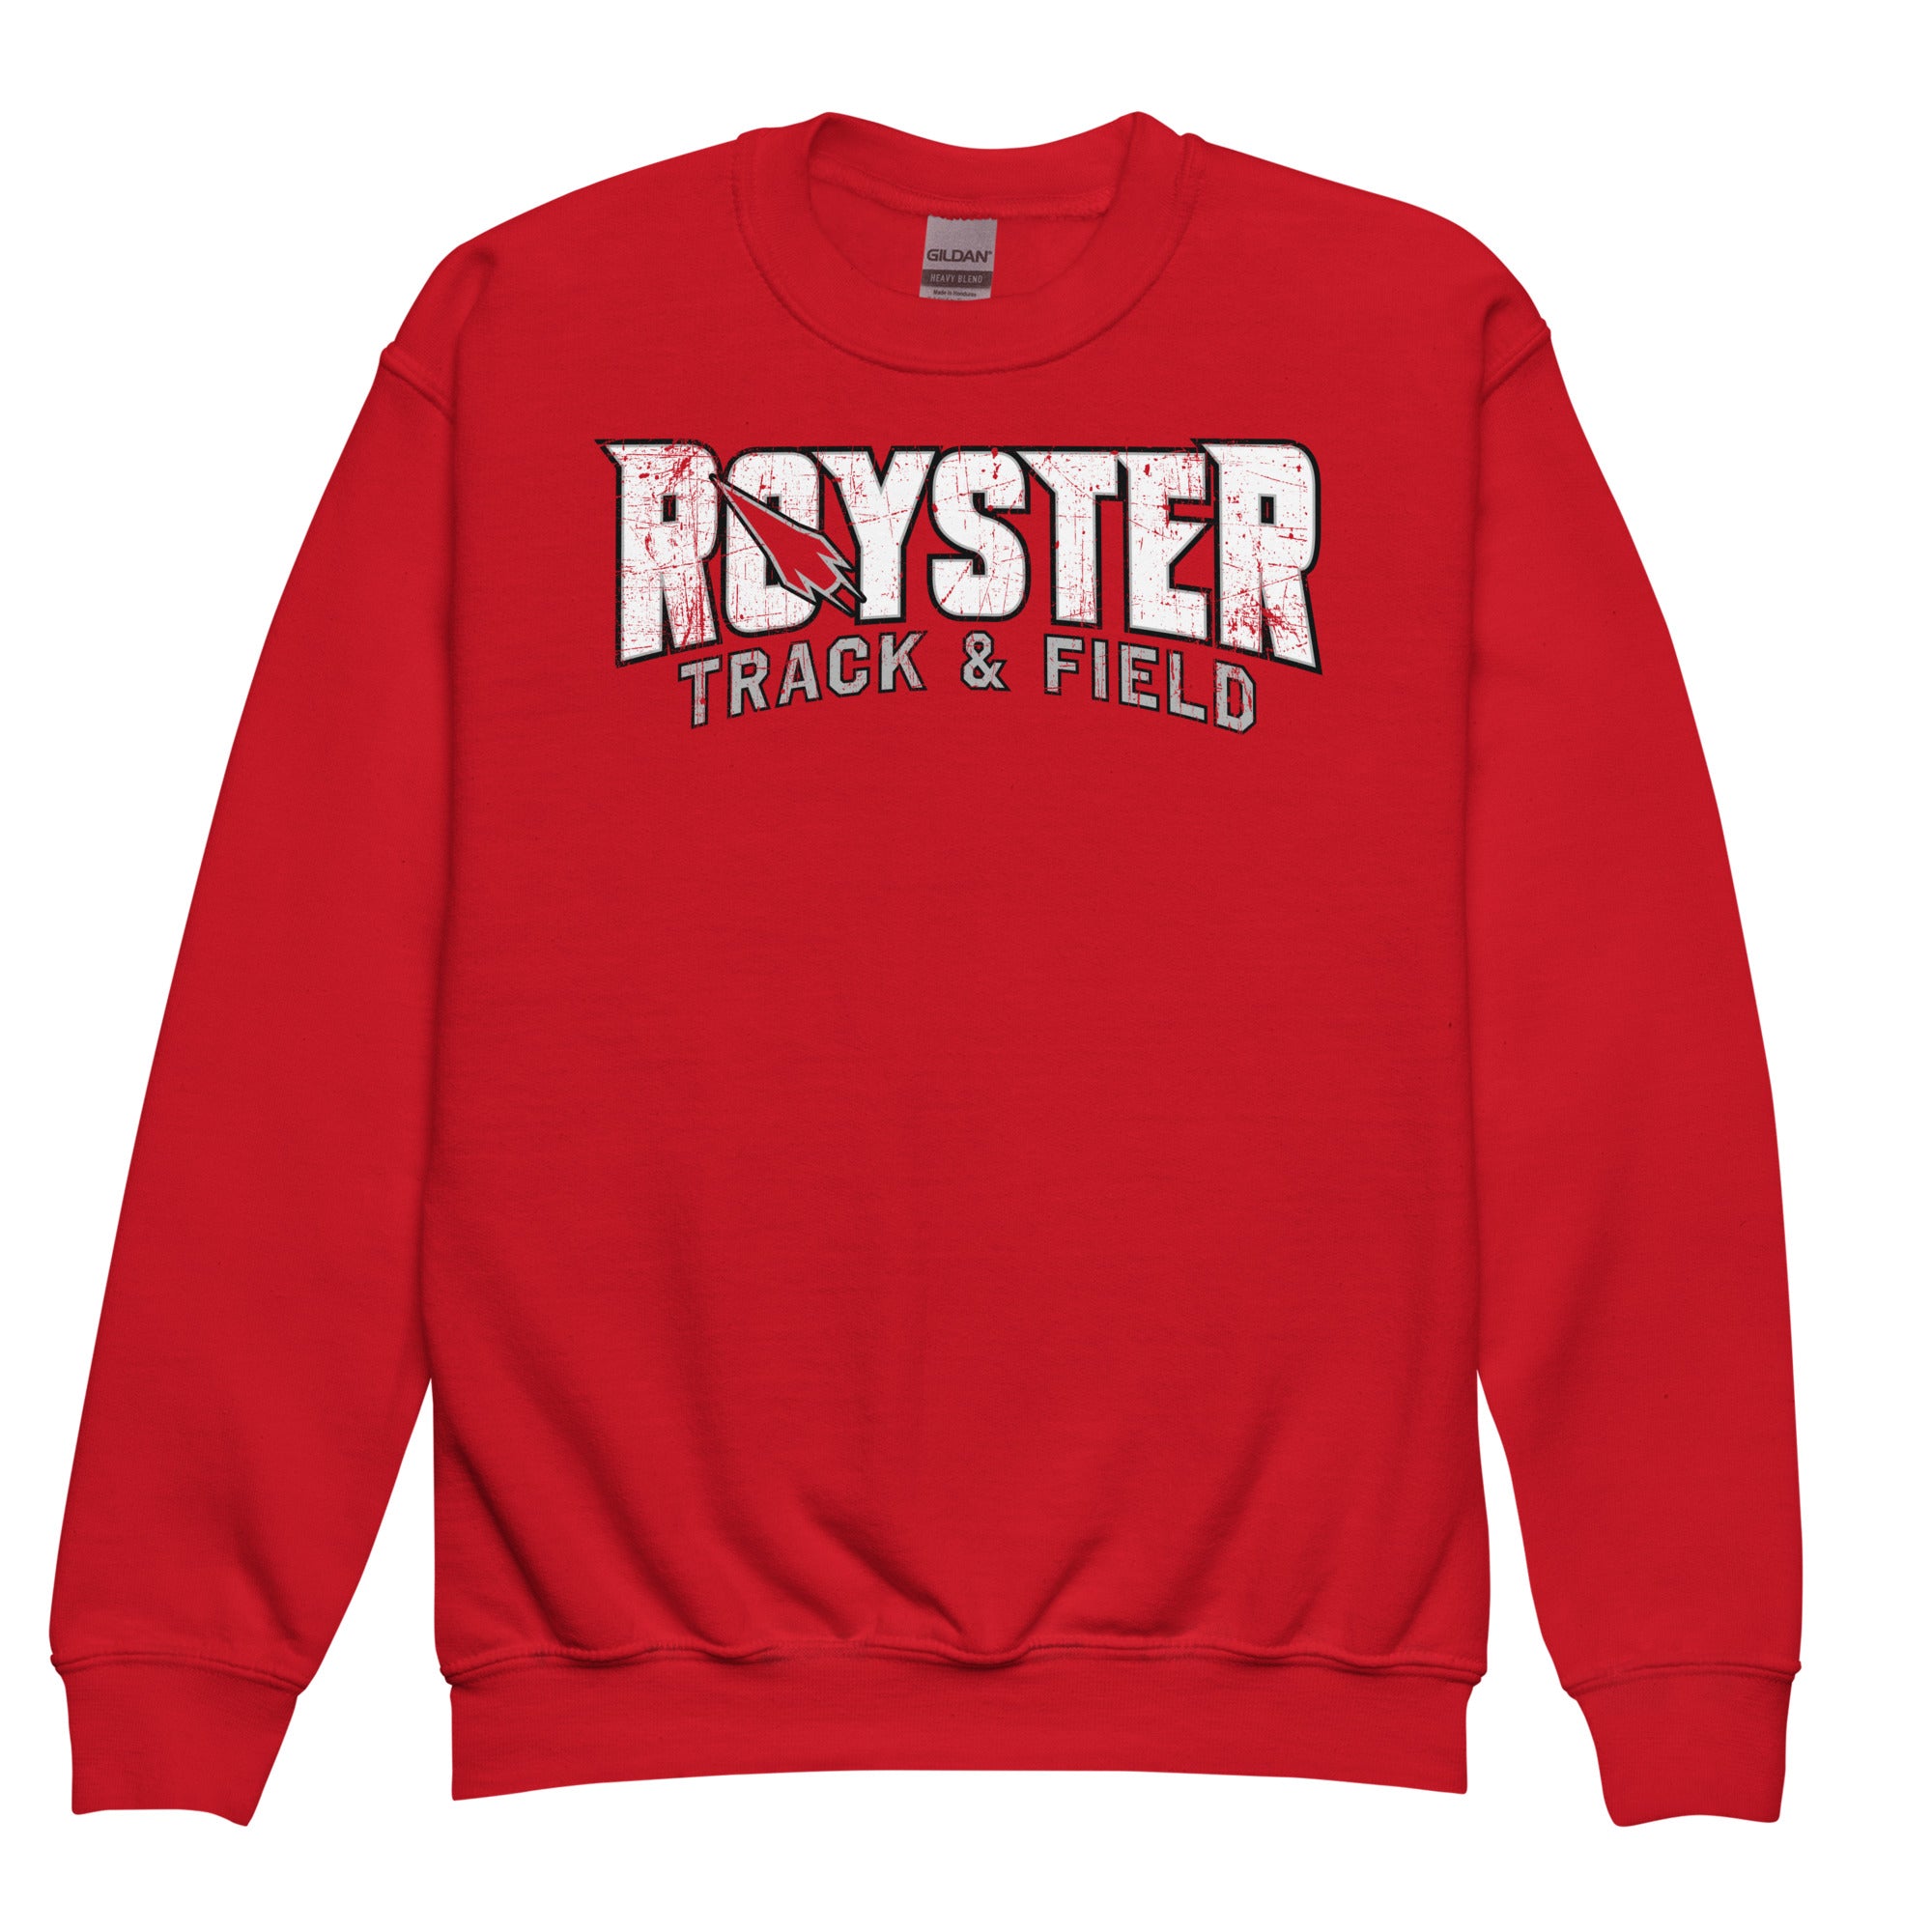 Royster Rockets Track & Field Youth Crew Neck Sweatshirt